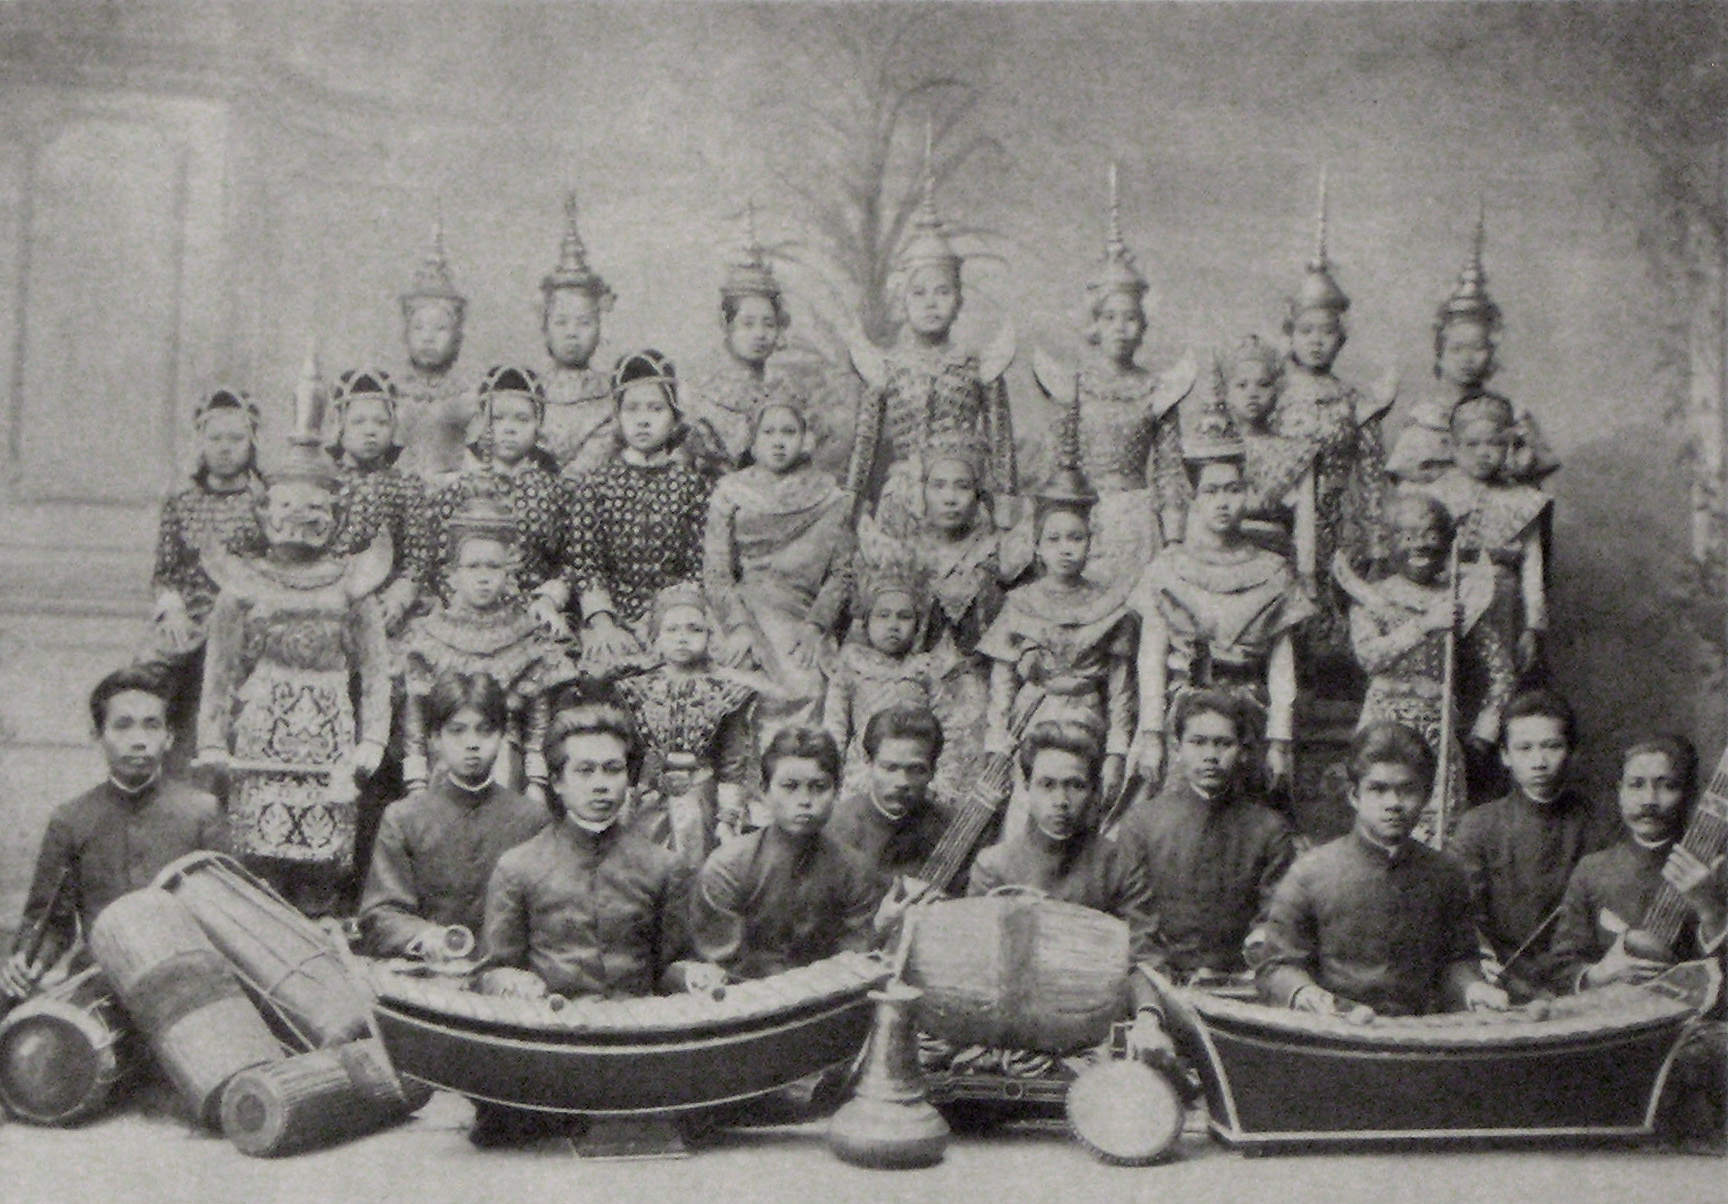 Siamese theater group around 1900